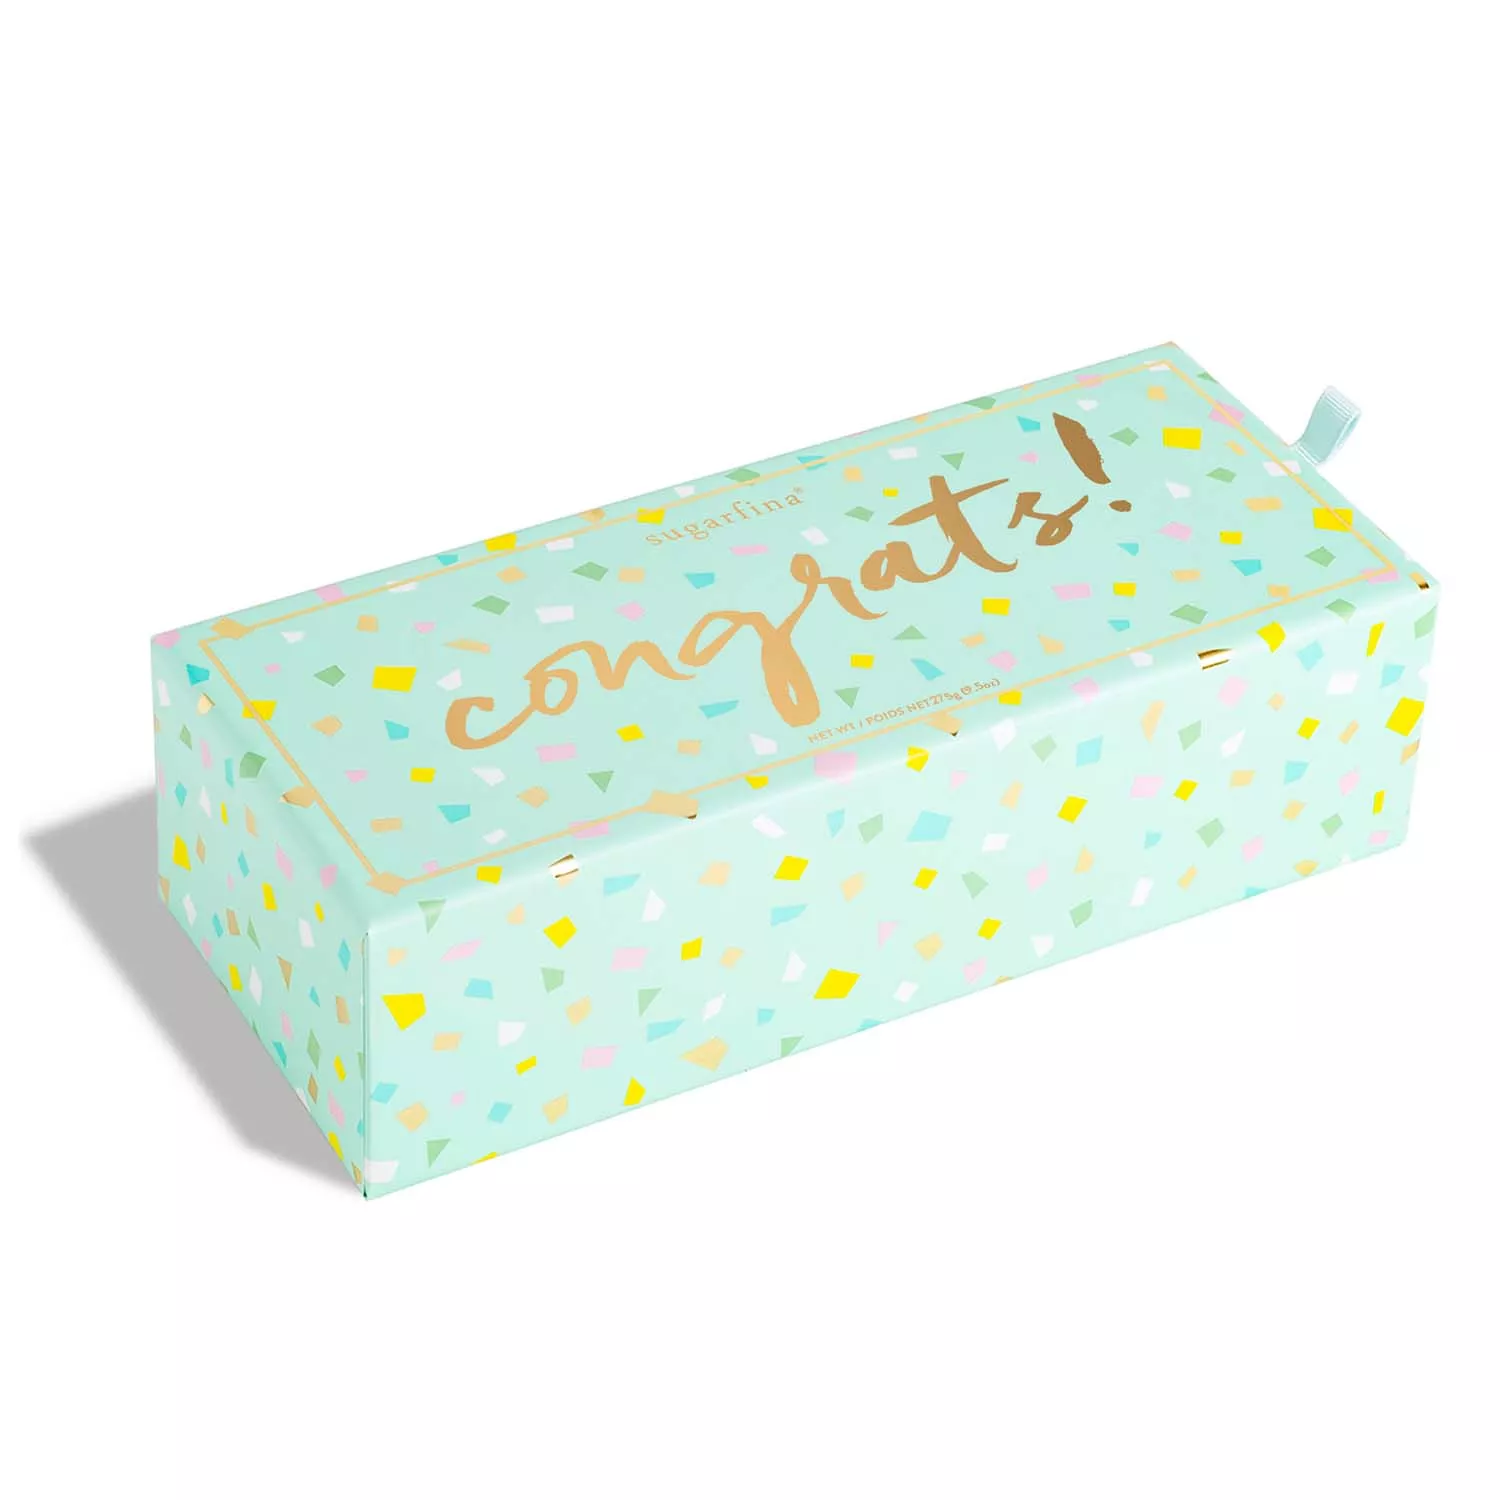 Sugarfina Congrats Candy Bento Box, Set of 3